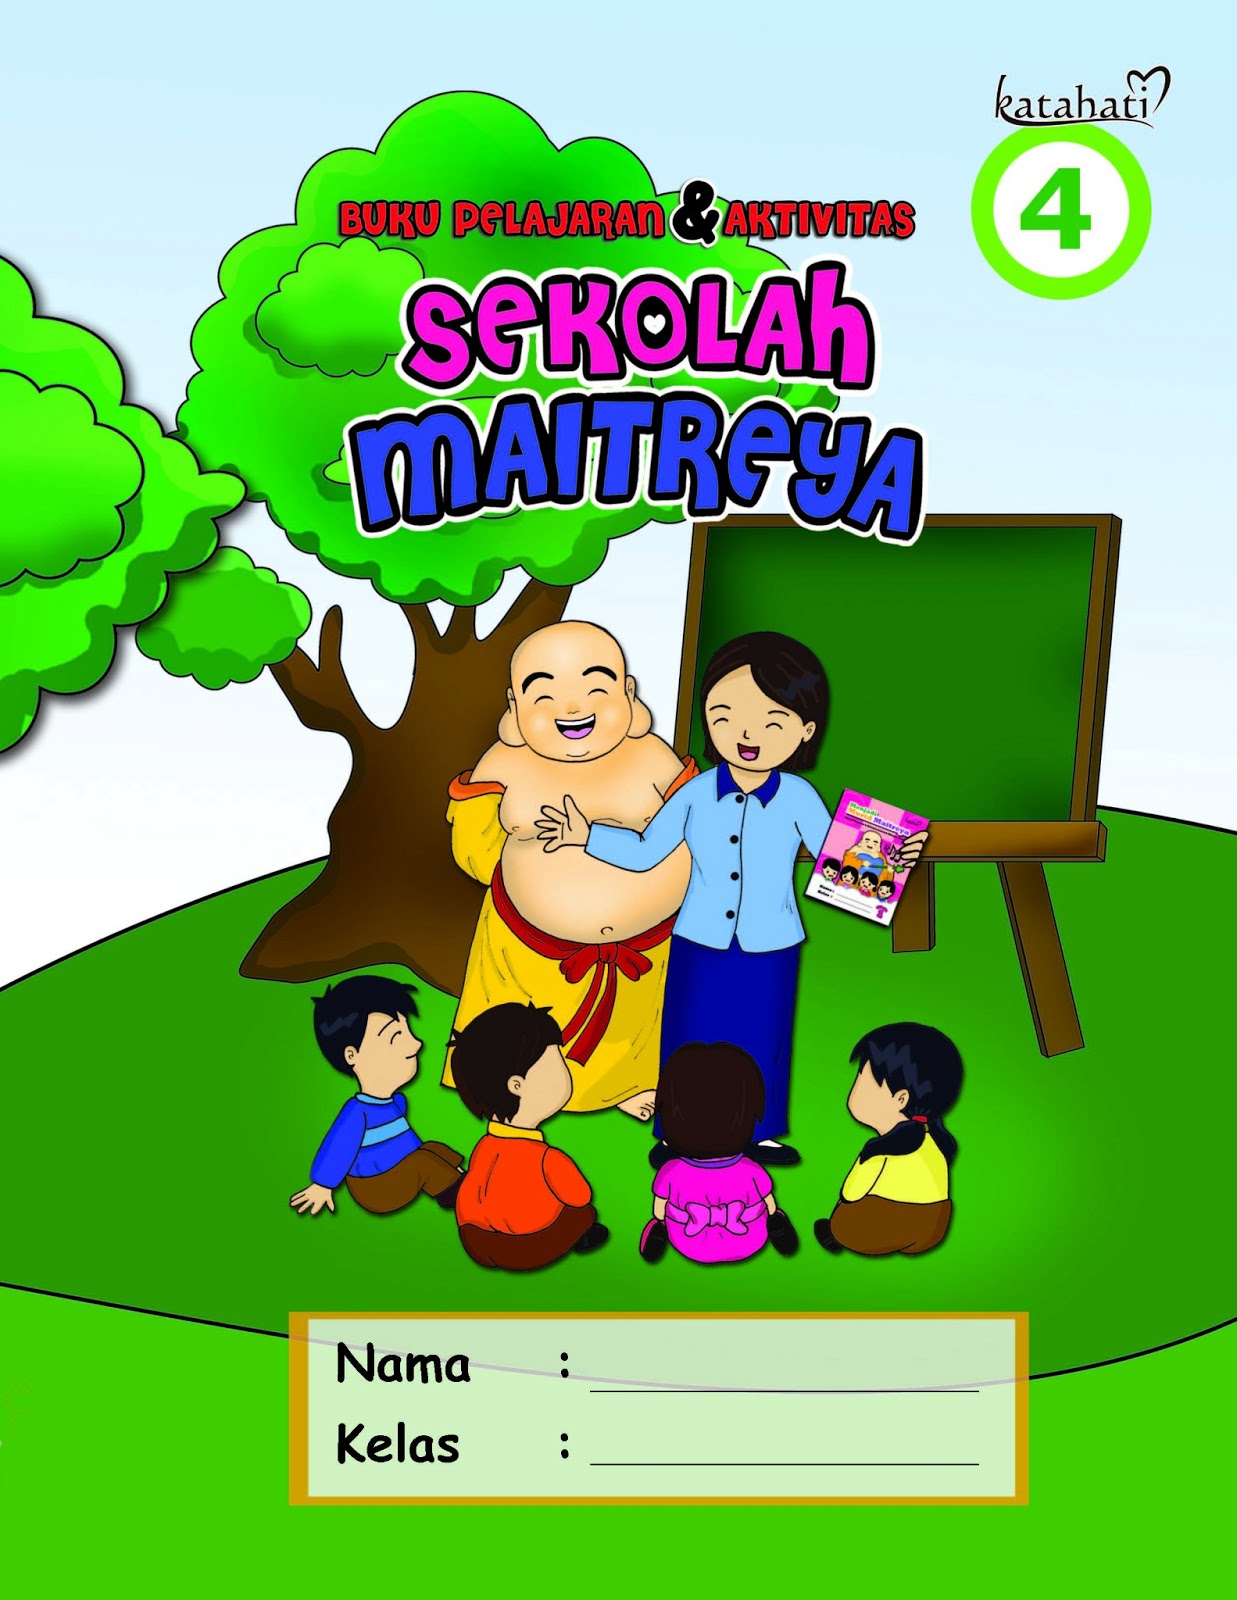 KATAHATI: Buku Sekolah Maitreya edisi 1-4